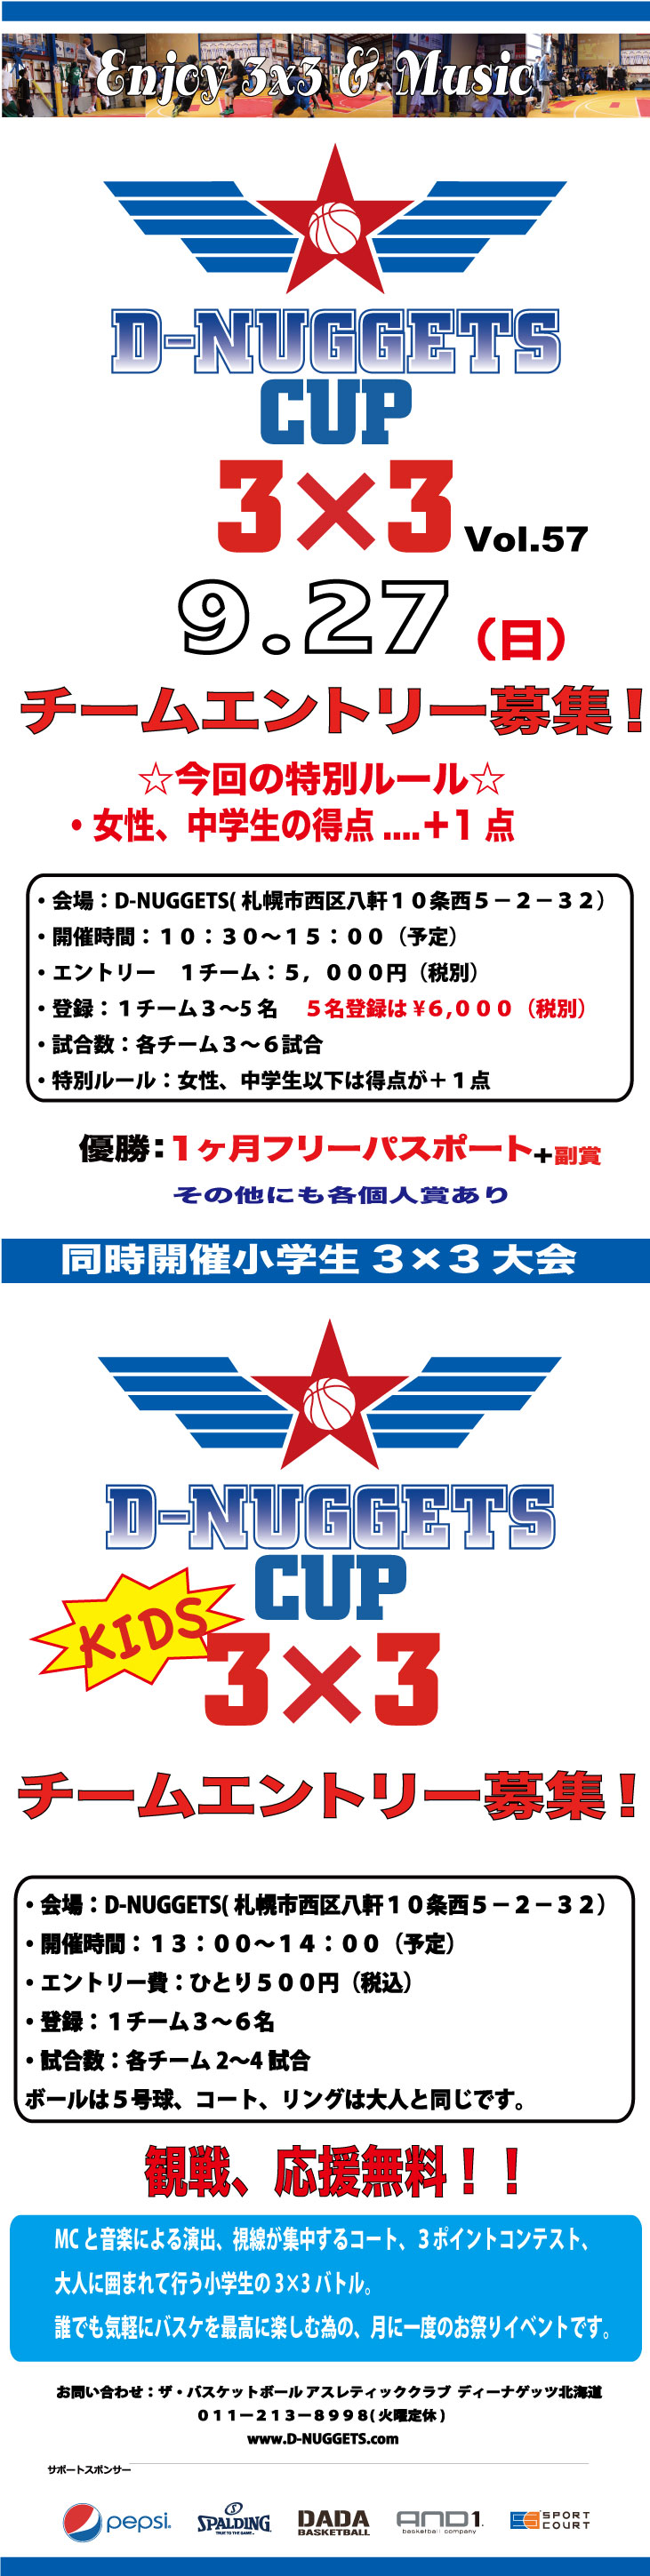 D-NUGGETS-CUP-HOKKAIDO-Vol._57.jpg